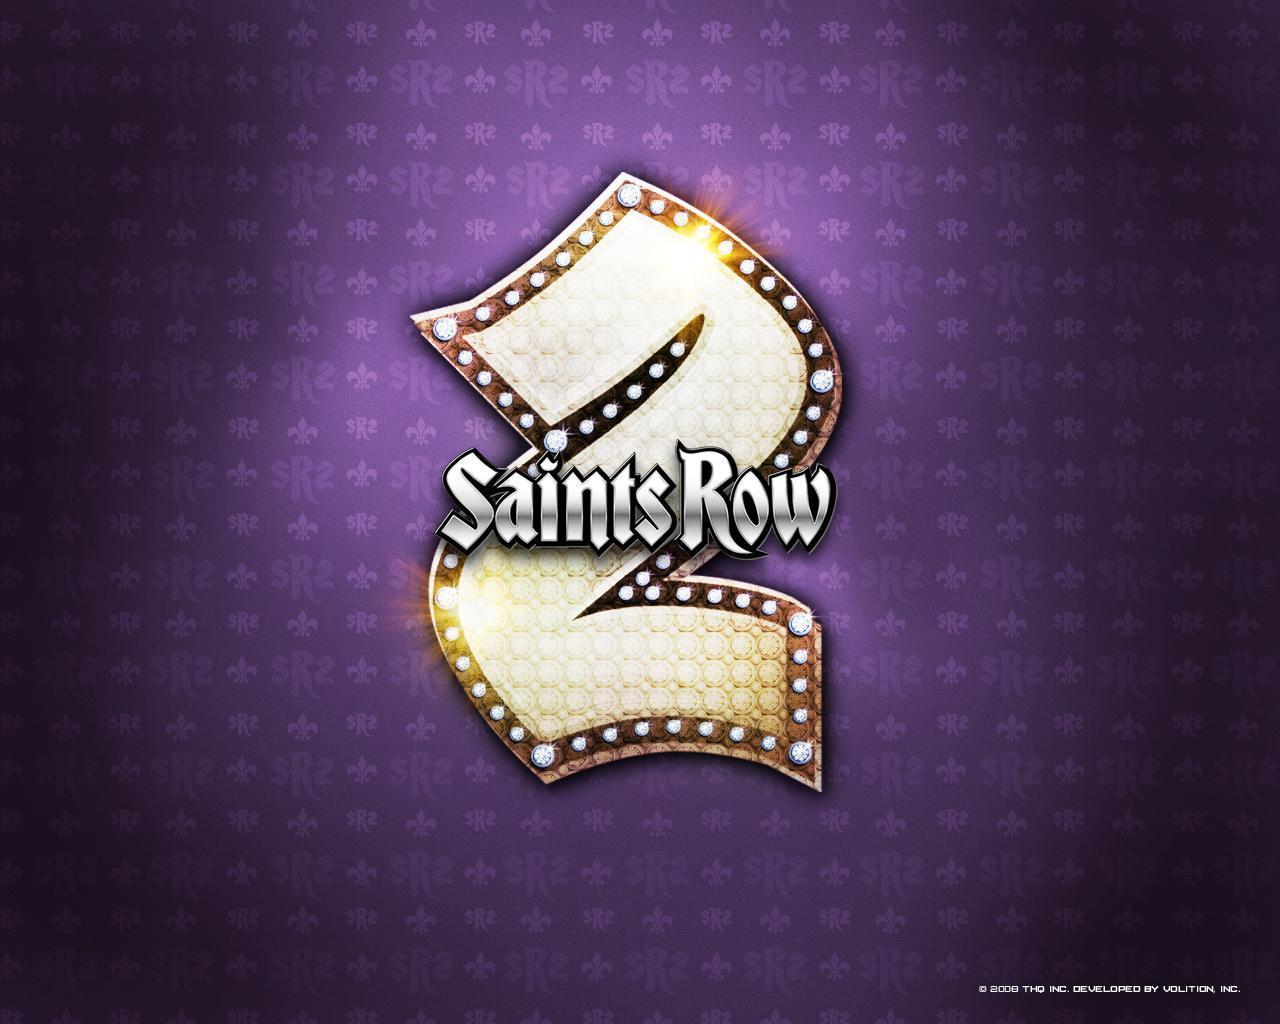 Saints Row 2 Row 2 Wallpaper